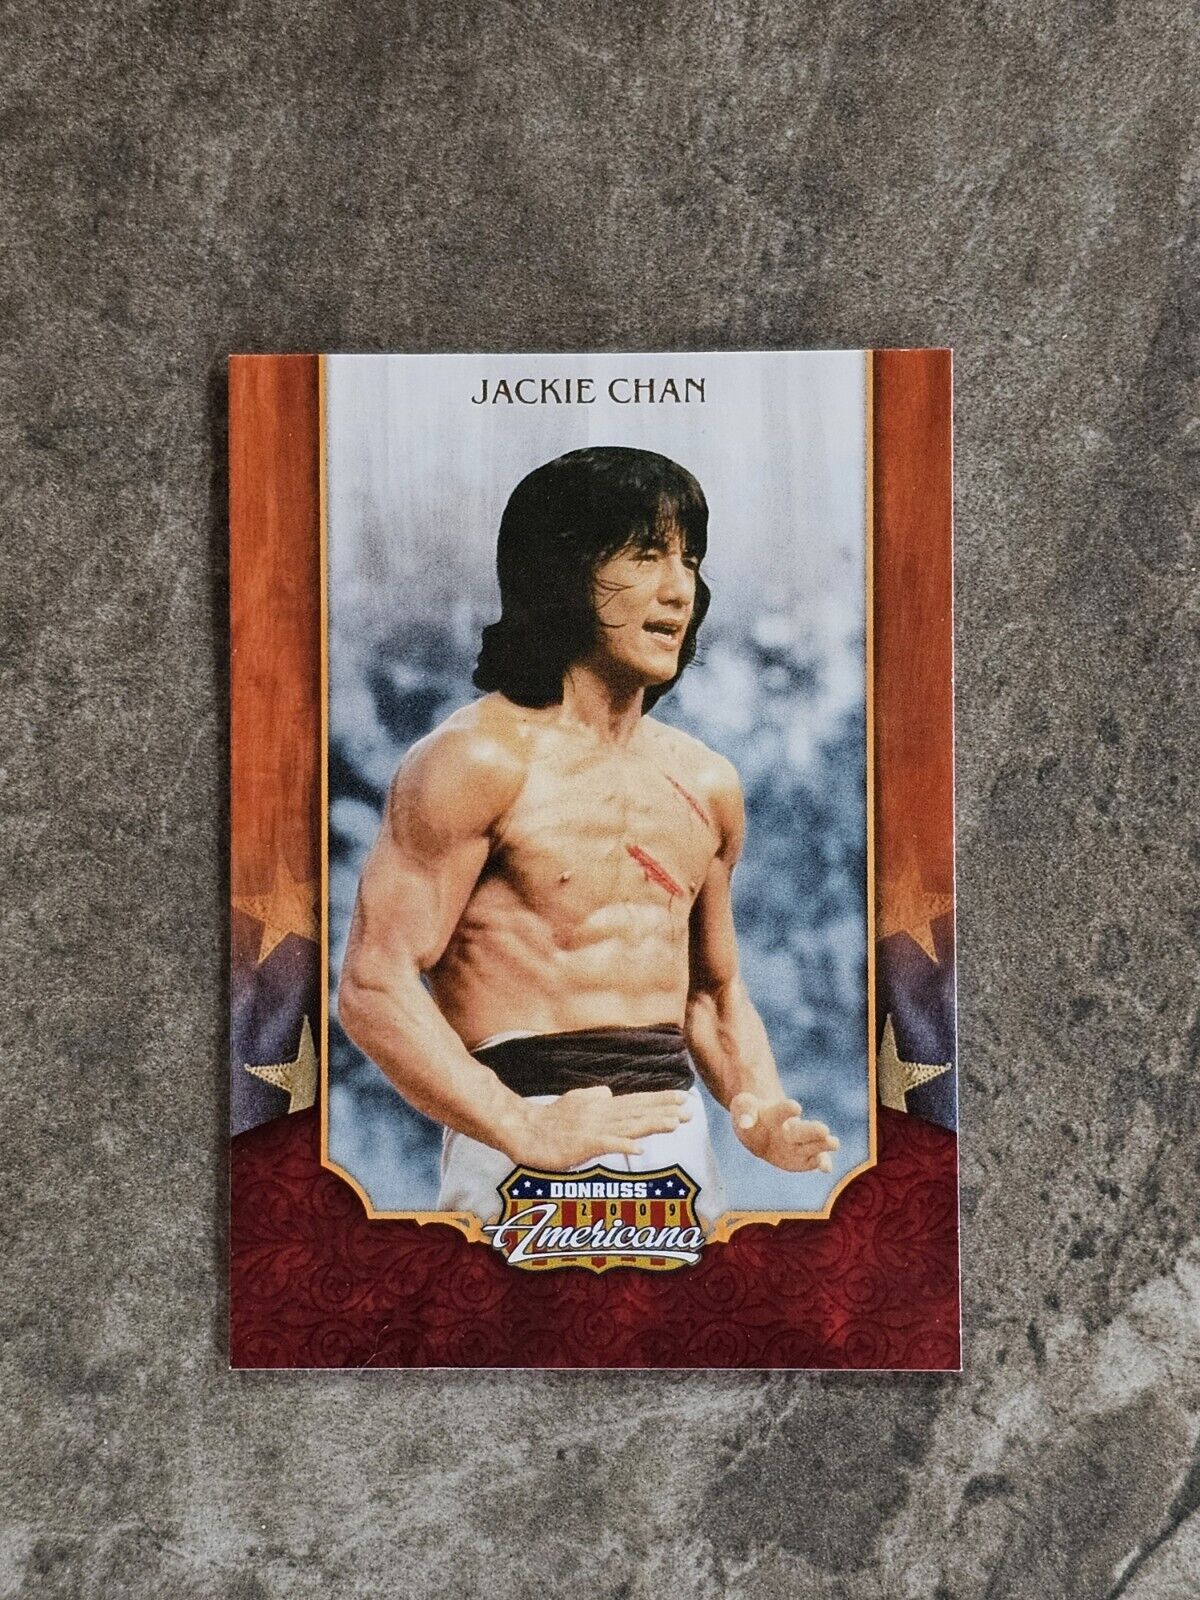 2009 Panini Donruss Americana Jackie Chan Card #1 🔥 Rush Hour Actor 🔥 